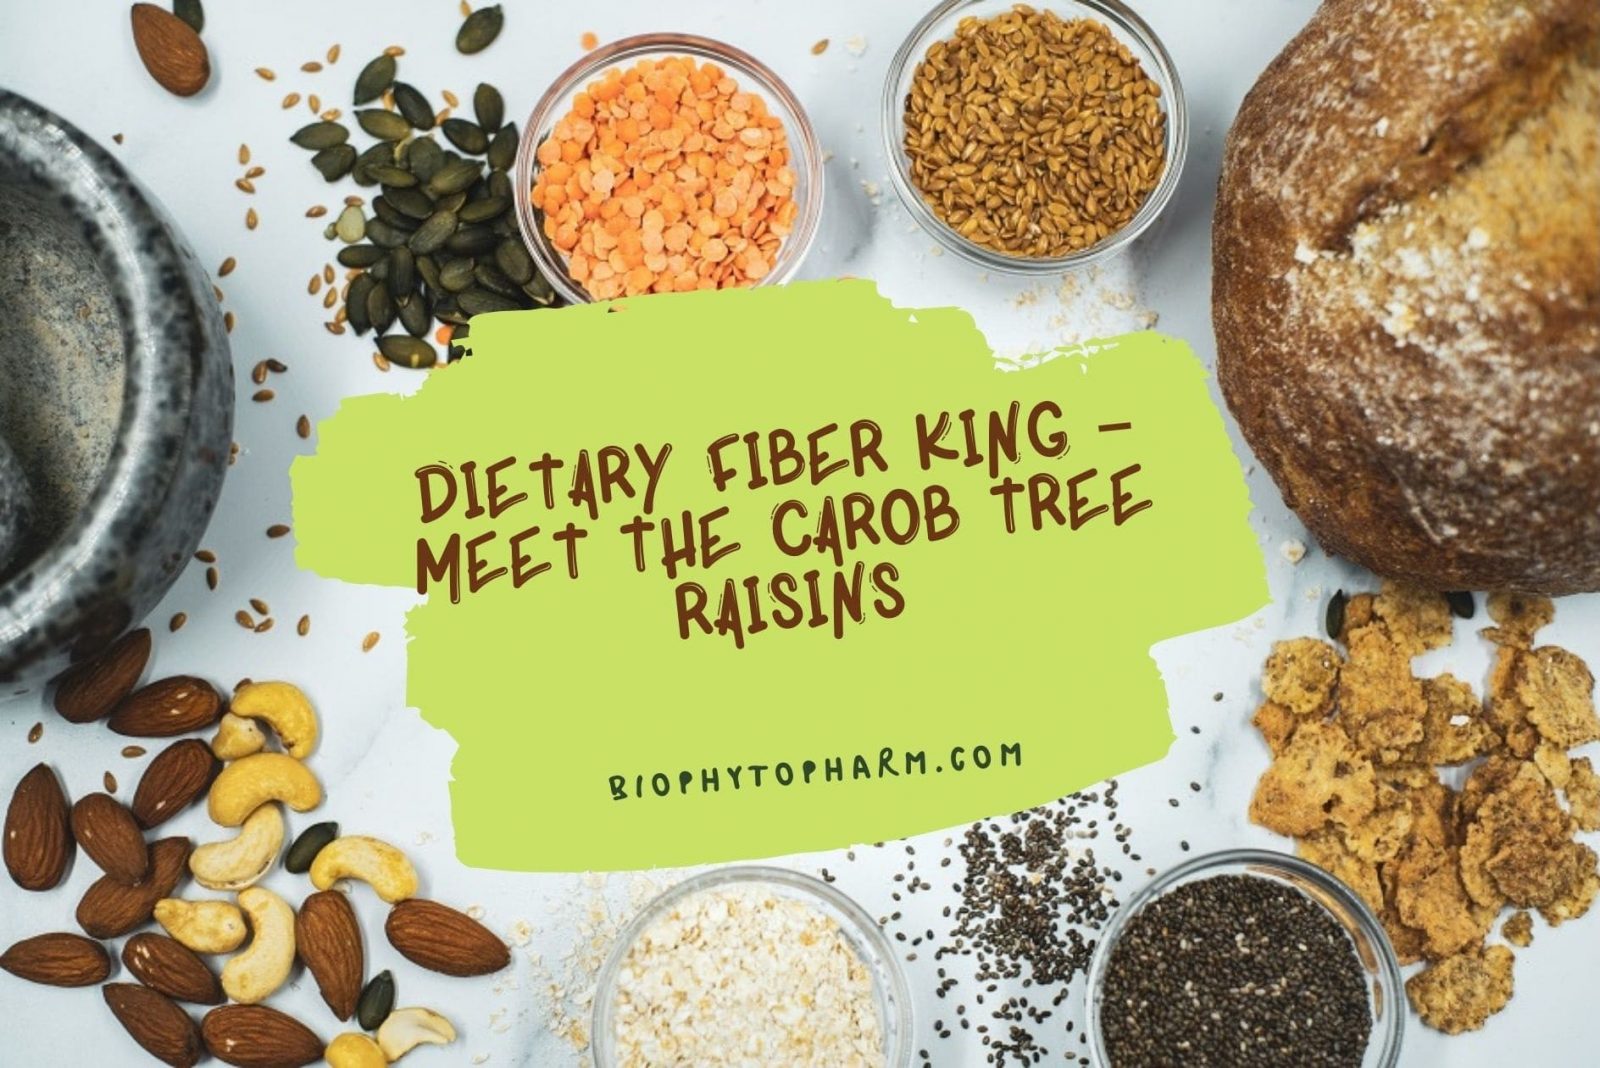 DIETARY FIBER KING – MEET THE CAROB TREE RAISINS